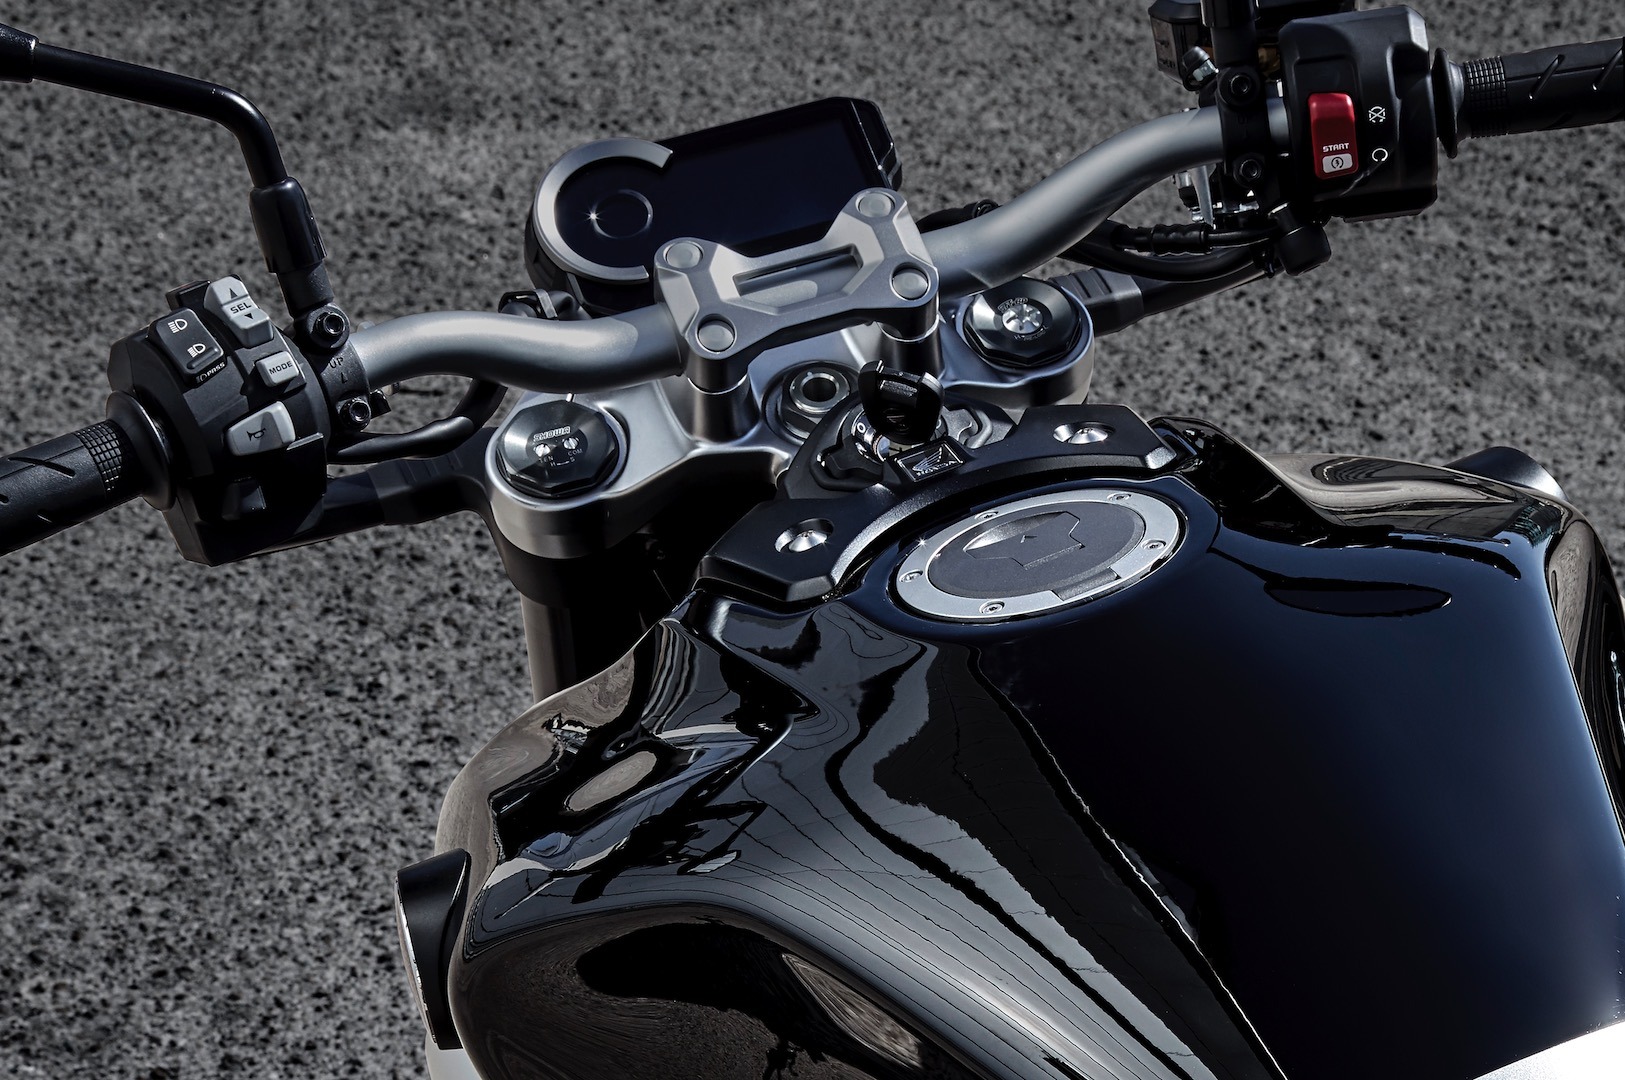 2018-Honda-CB1000R-First-Look-naked-sport-motorcycle-6.jpg